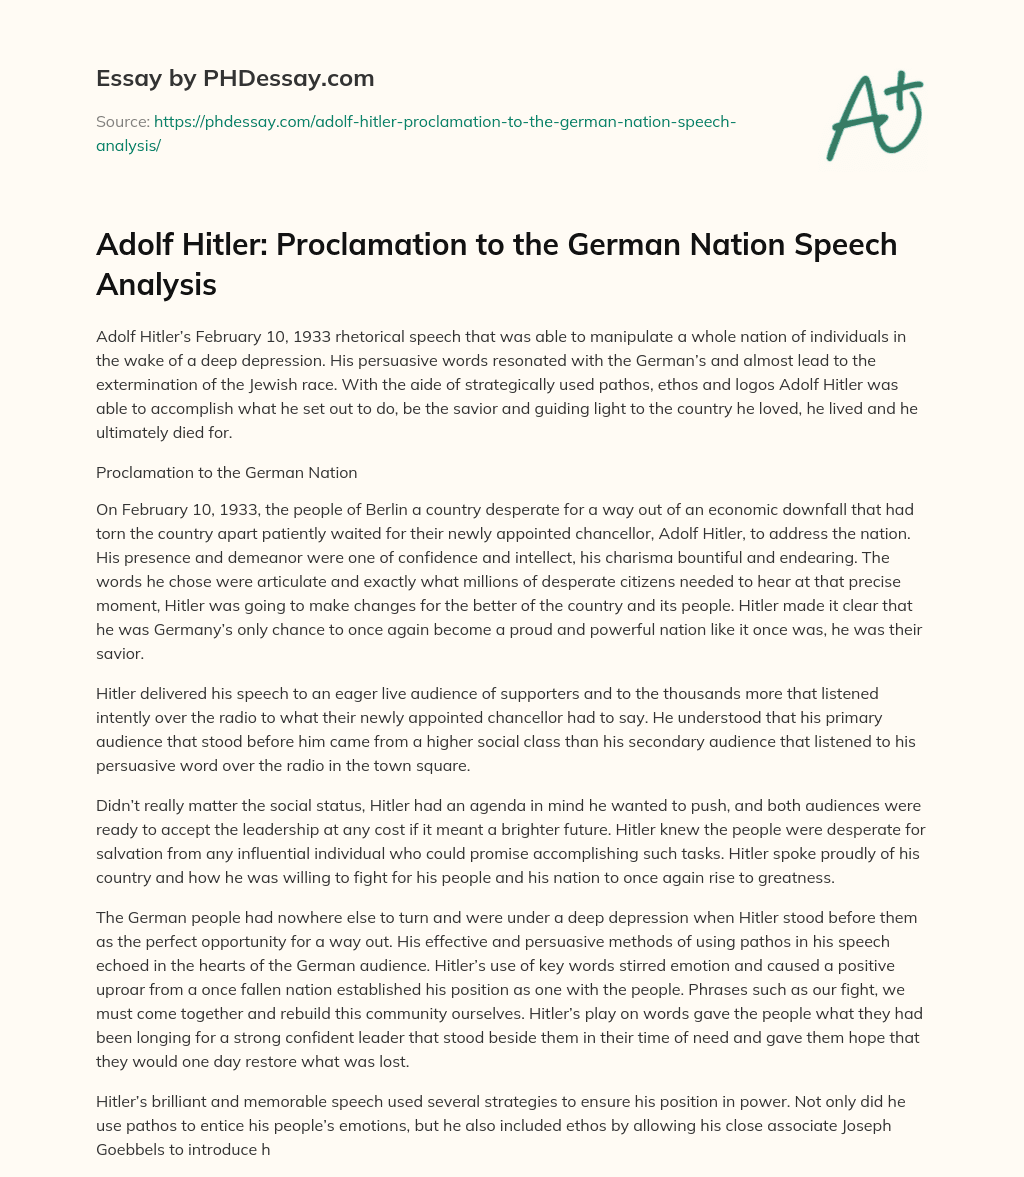 Adolf Hitler: Proclamation to the German Nation Speech Analysis essay